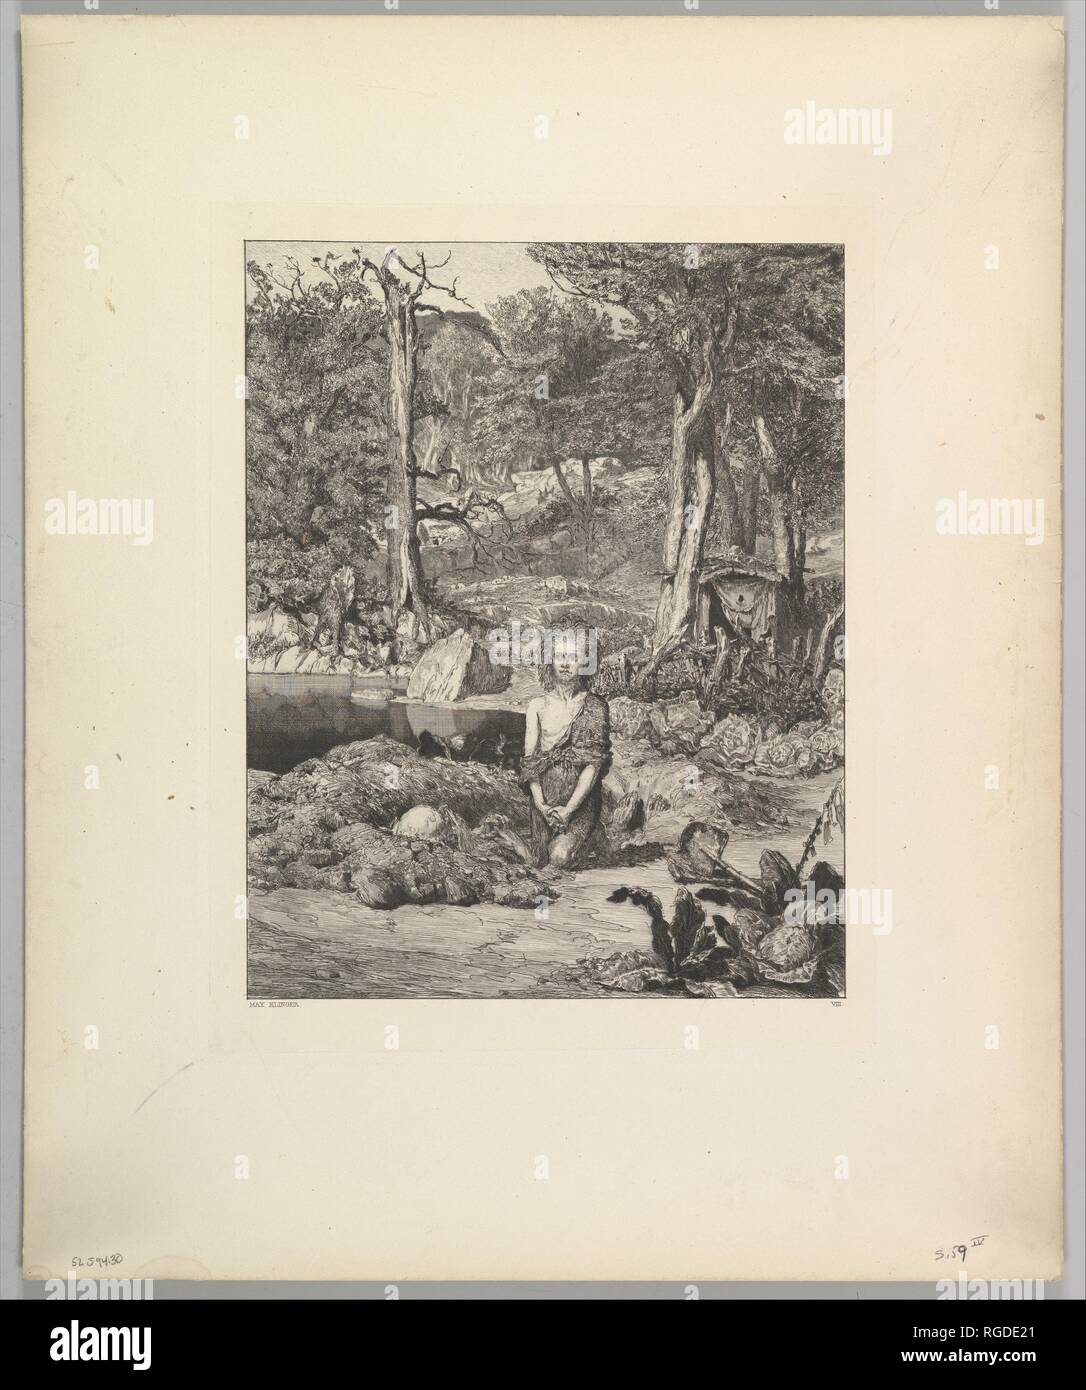 Simplicius am Grabe des Einsiedlers, from the series Intermezzi. Artist: Max Klinger (German, Leipzig 1857-1920 Großjena). Dimensions: Plate: 11 15/16 × 10 9/16 in. (30.4 × 26.8 cm)  Sheet: 19 3/8 × 16 in. (49.2 × 40.6 cm). Date: n.d.. Museum: Metropolitan Museum of Art, New York, USA. Stock Photo